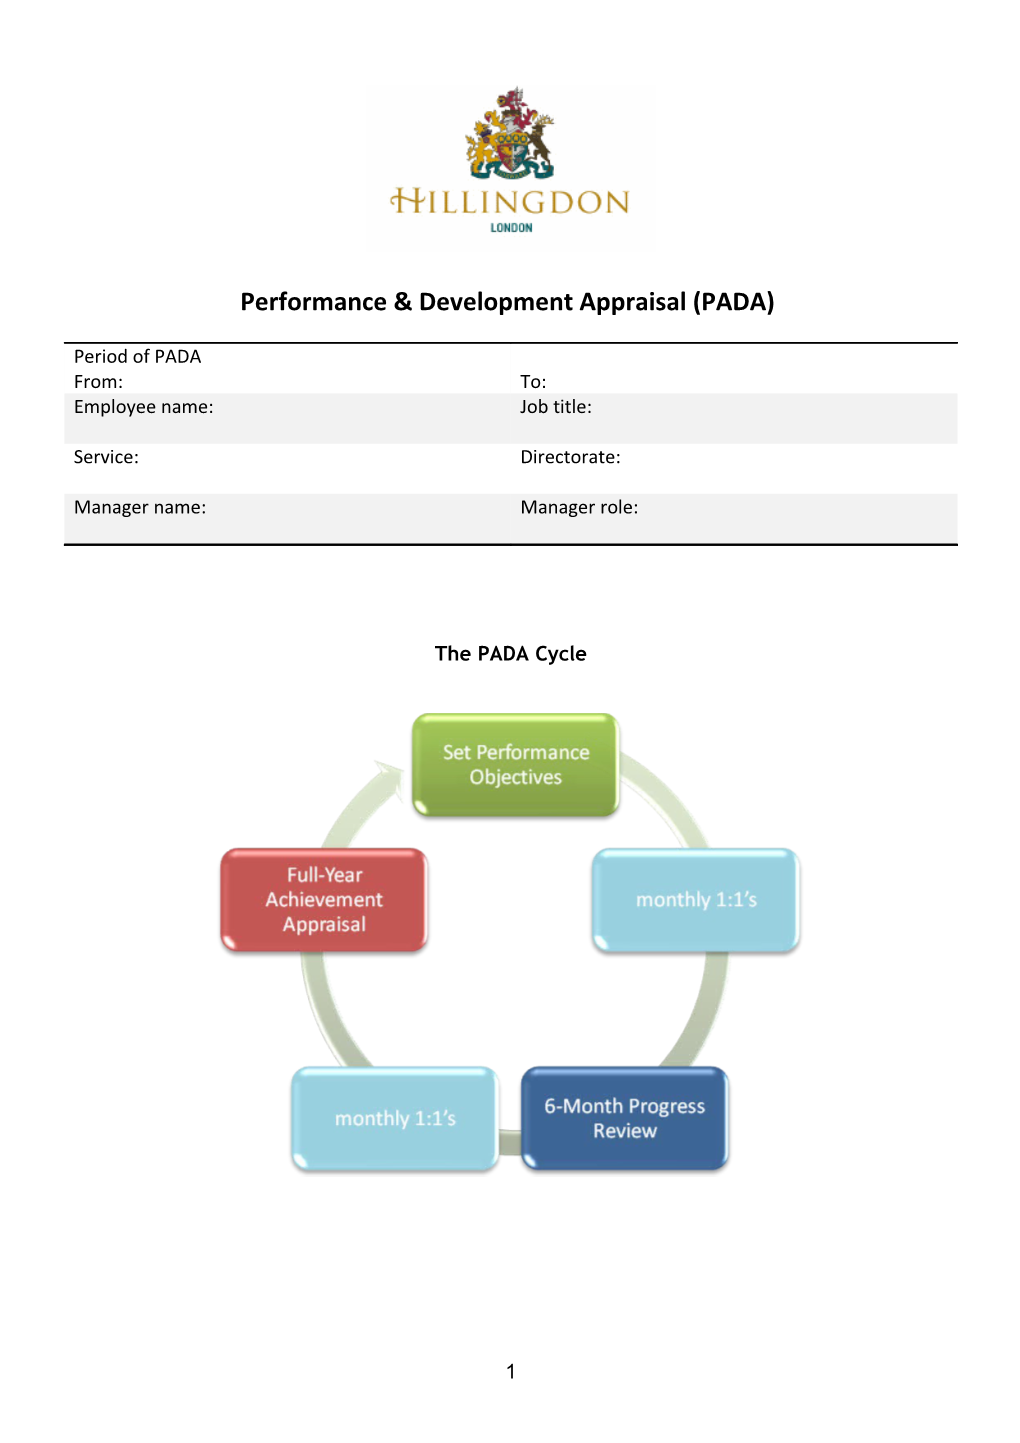 The Employee Performance and Development Appraisal (PADA)